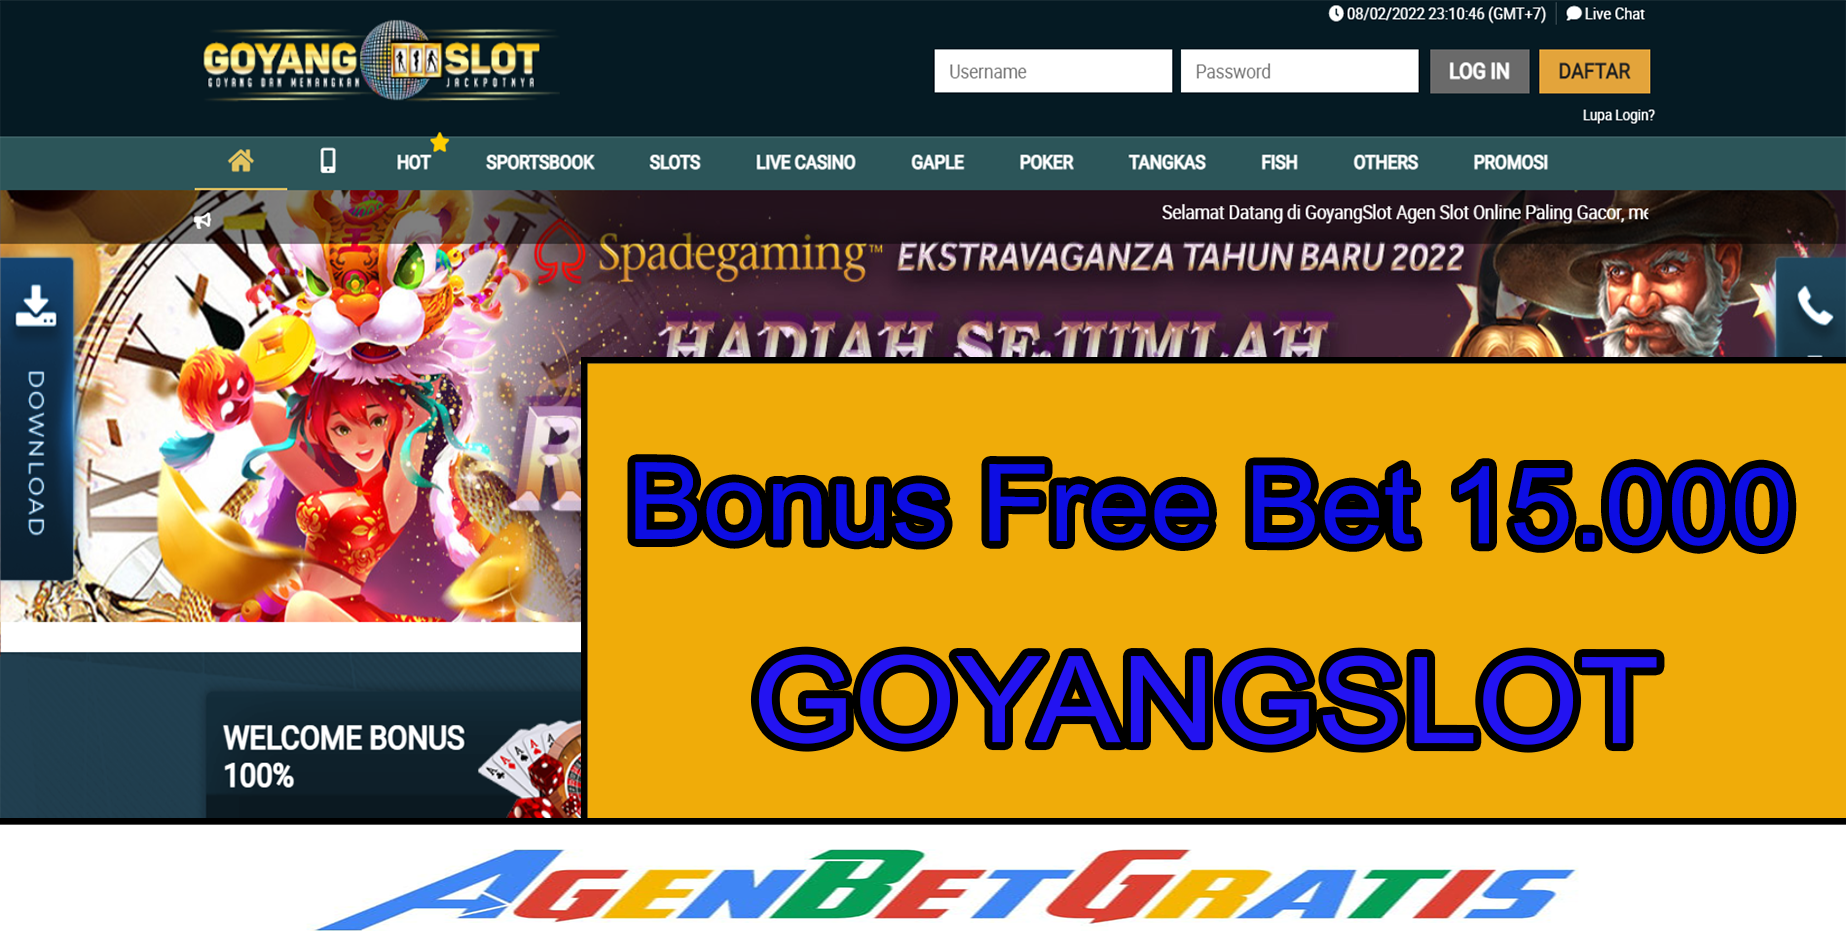 GOYANGSLOT - Bonus FreeBet 15.000